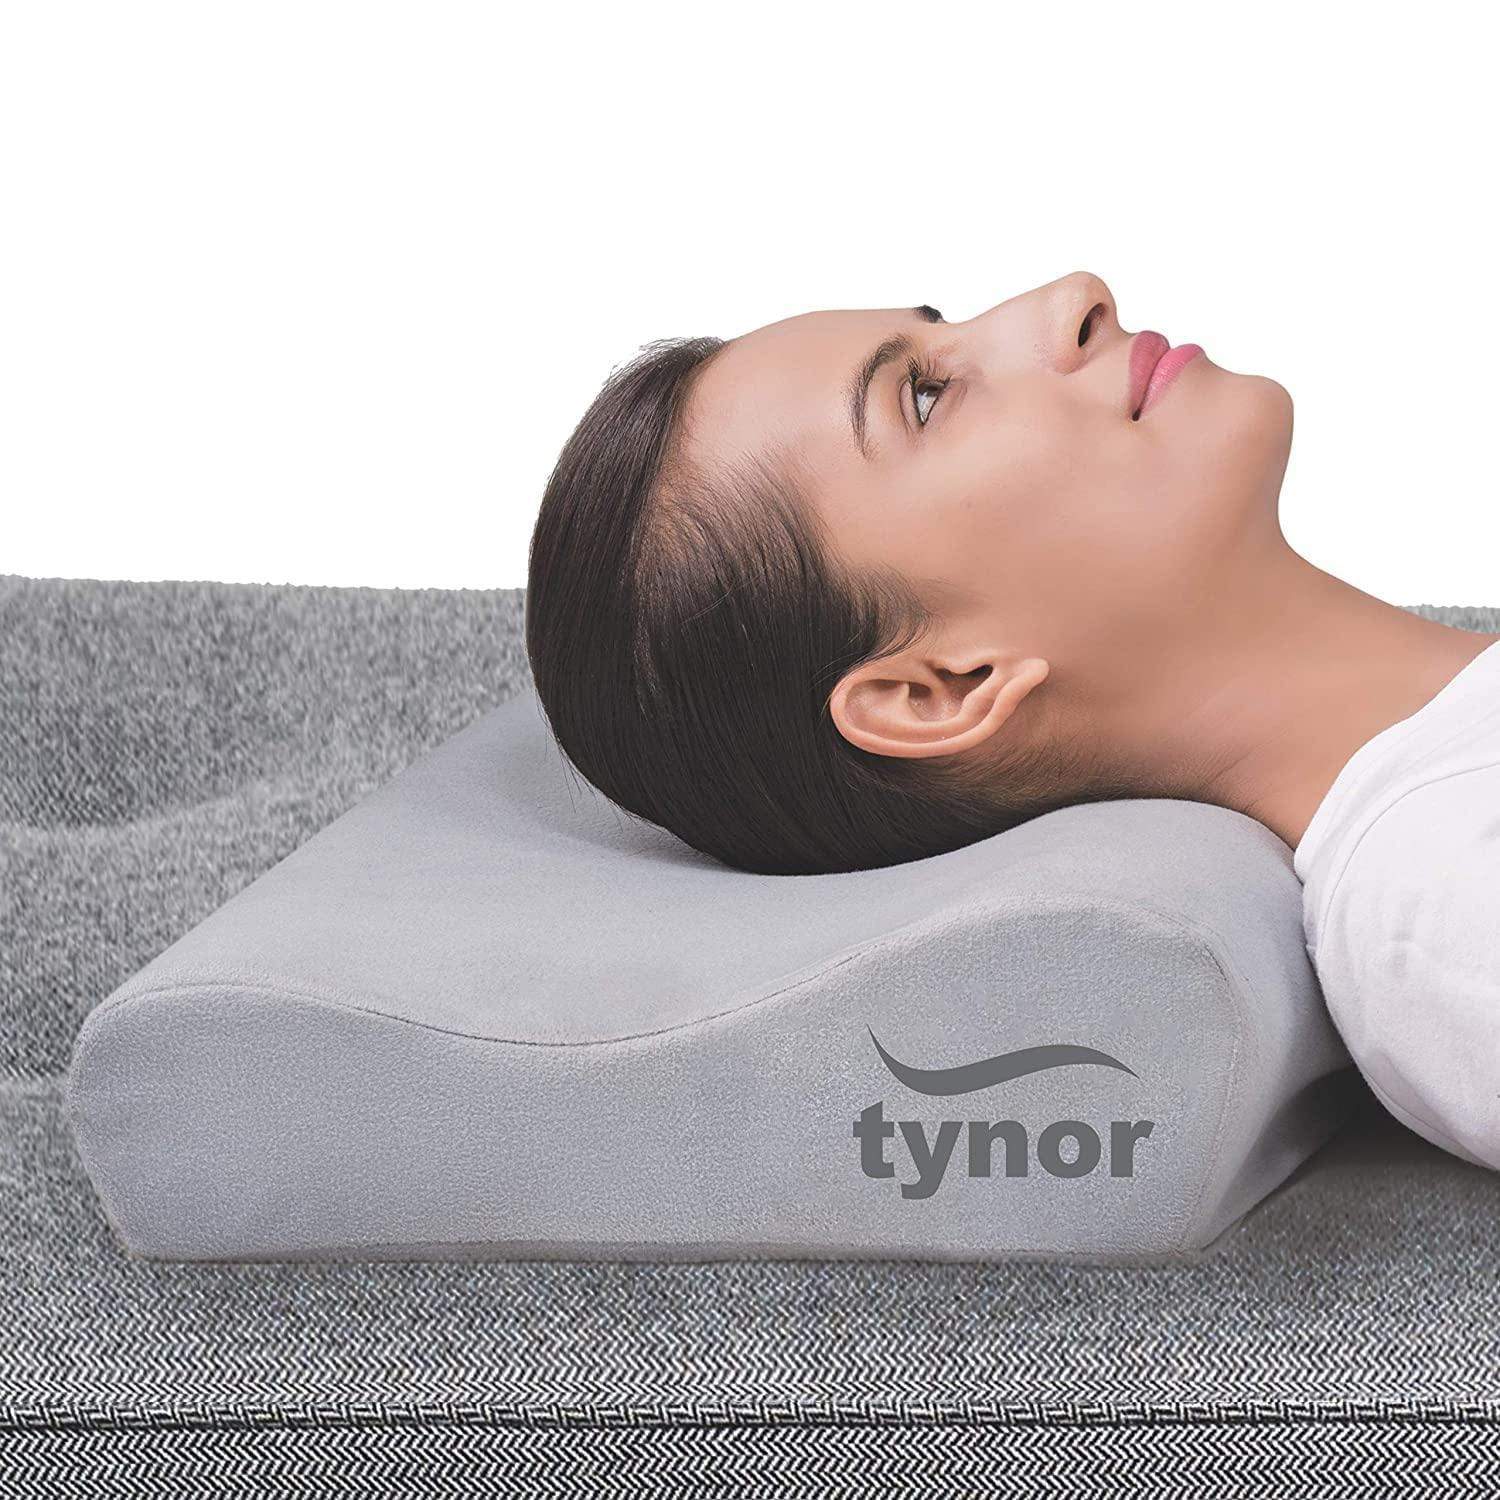 Tynor Contoured Cervical Pillow (B-19)-Health & Personal Care-dealsplant